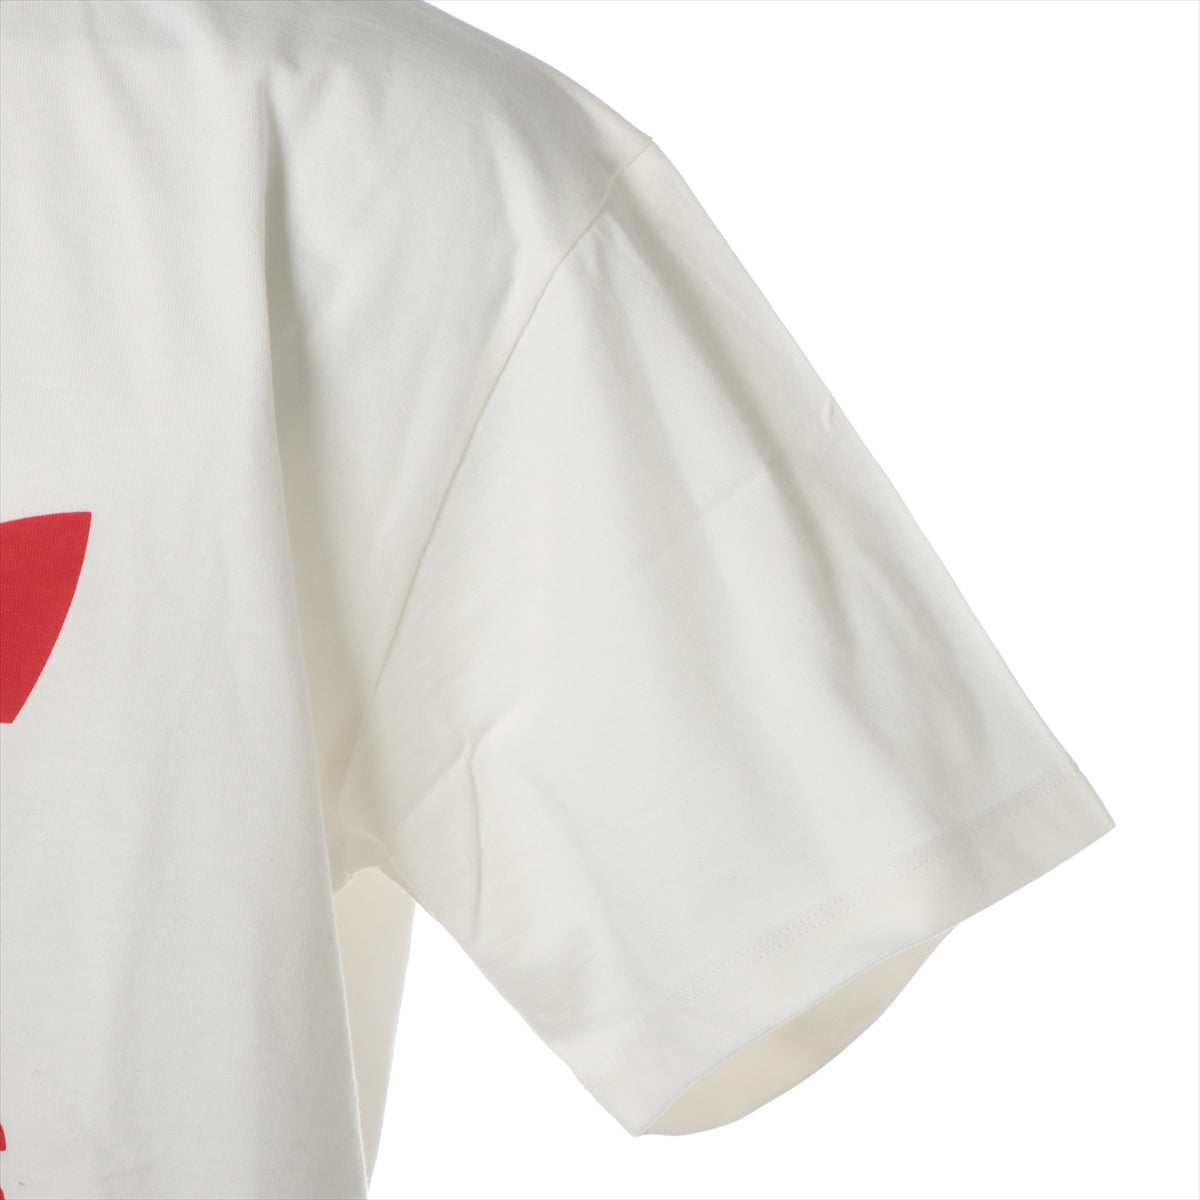 Gucci x adidas Cotton T-shirt M Men's Red x white  717422